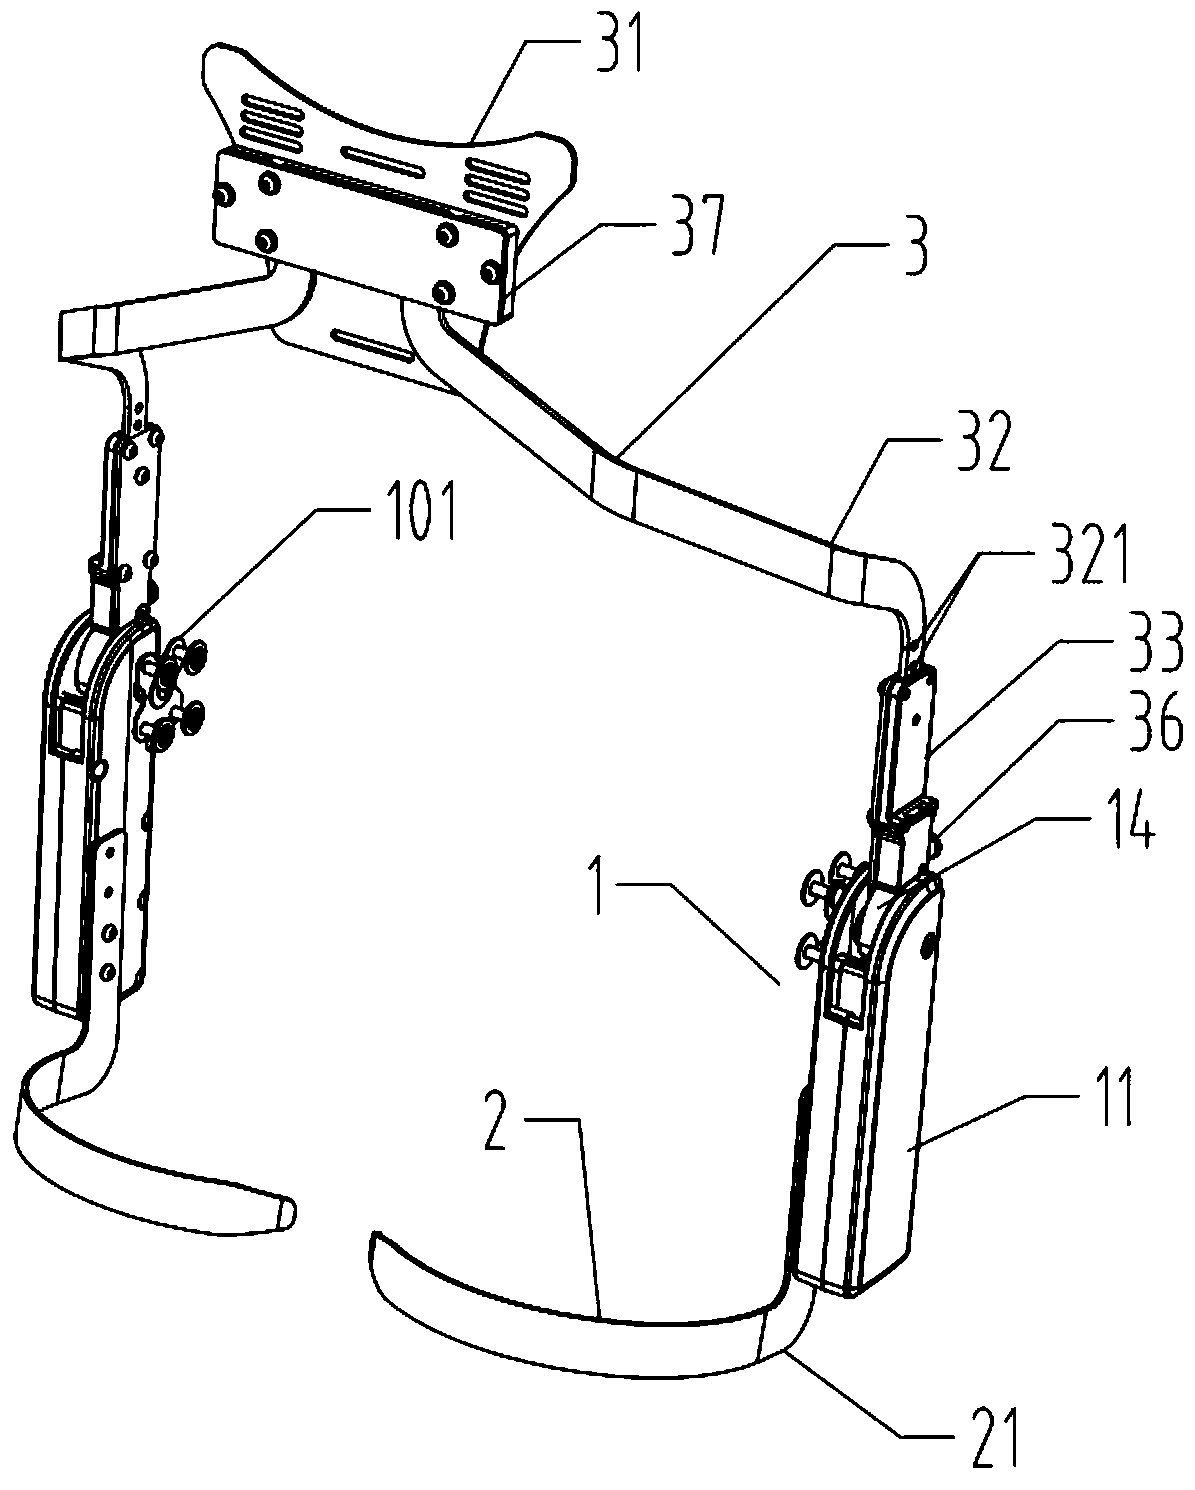 Adjustable energy storage waist hip exoskeleton